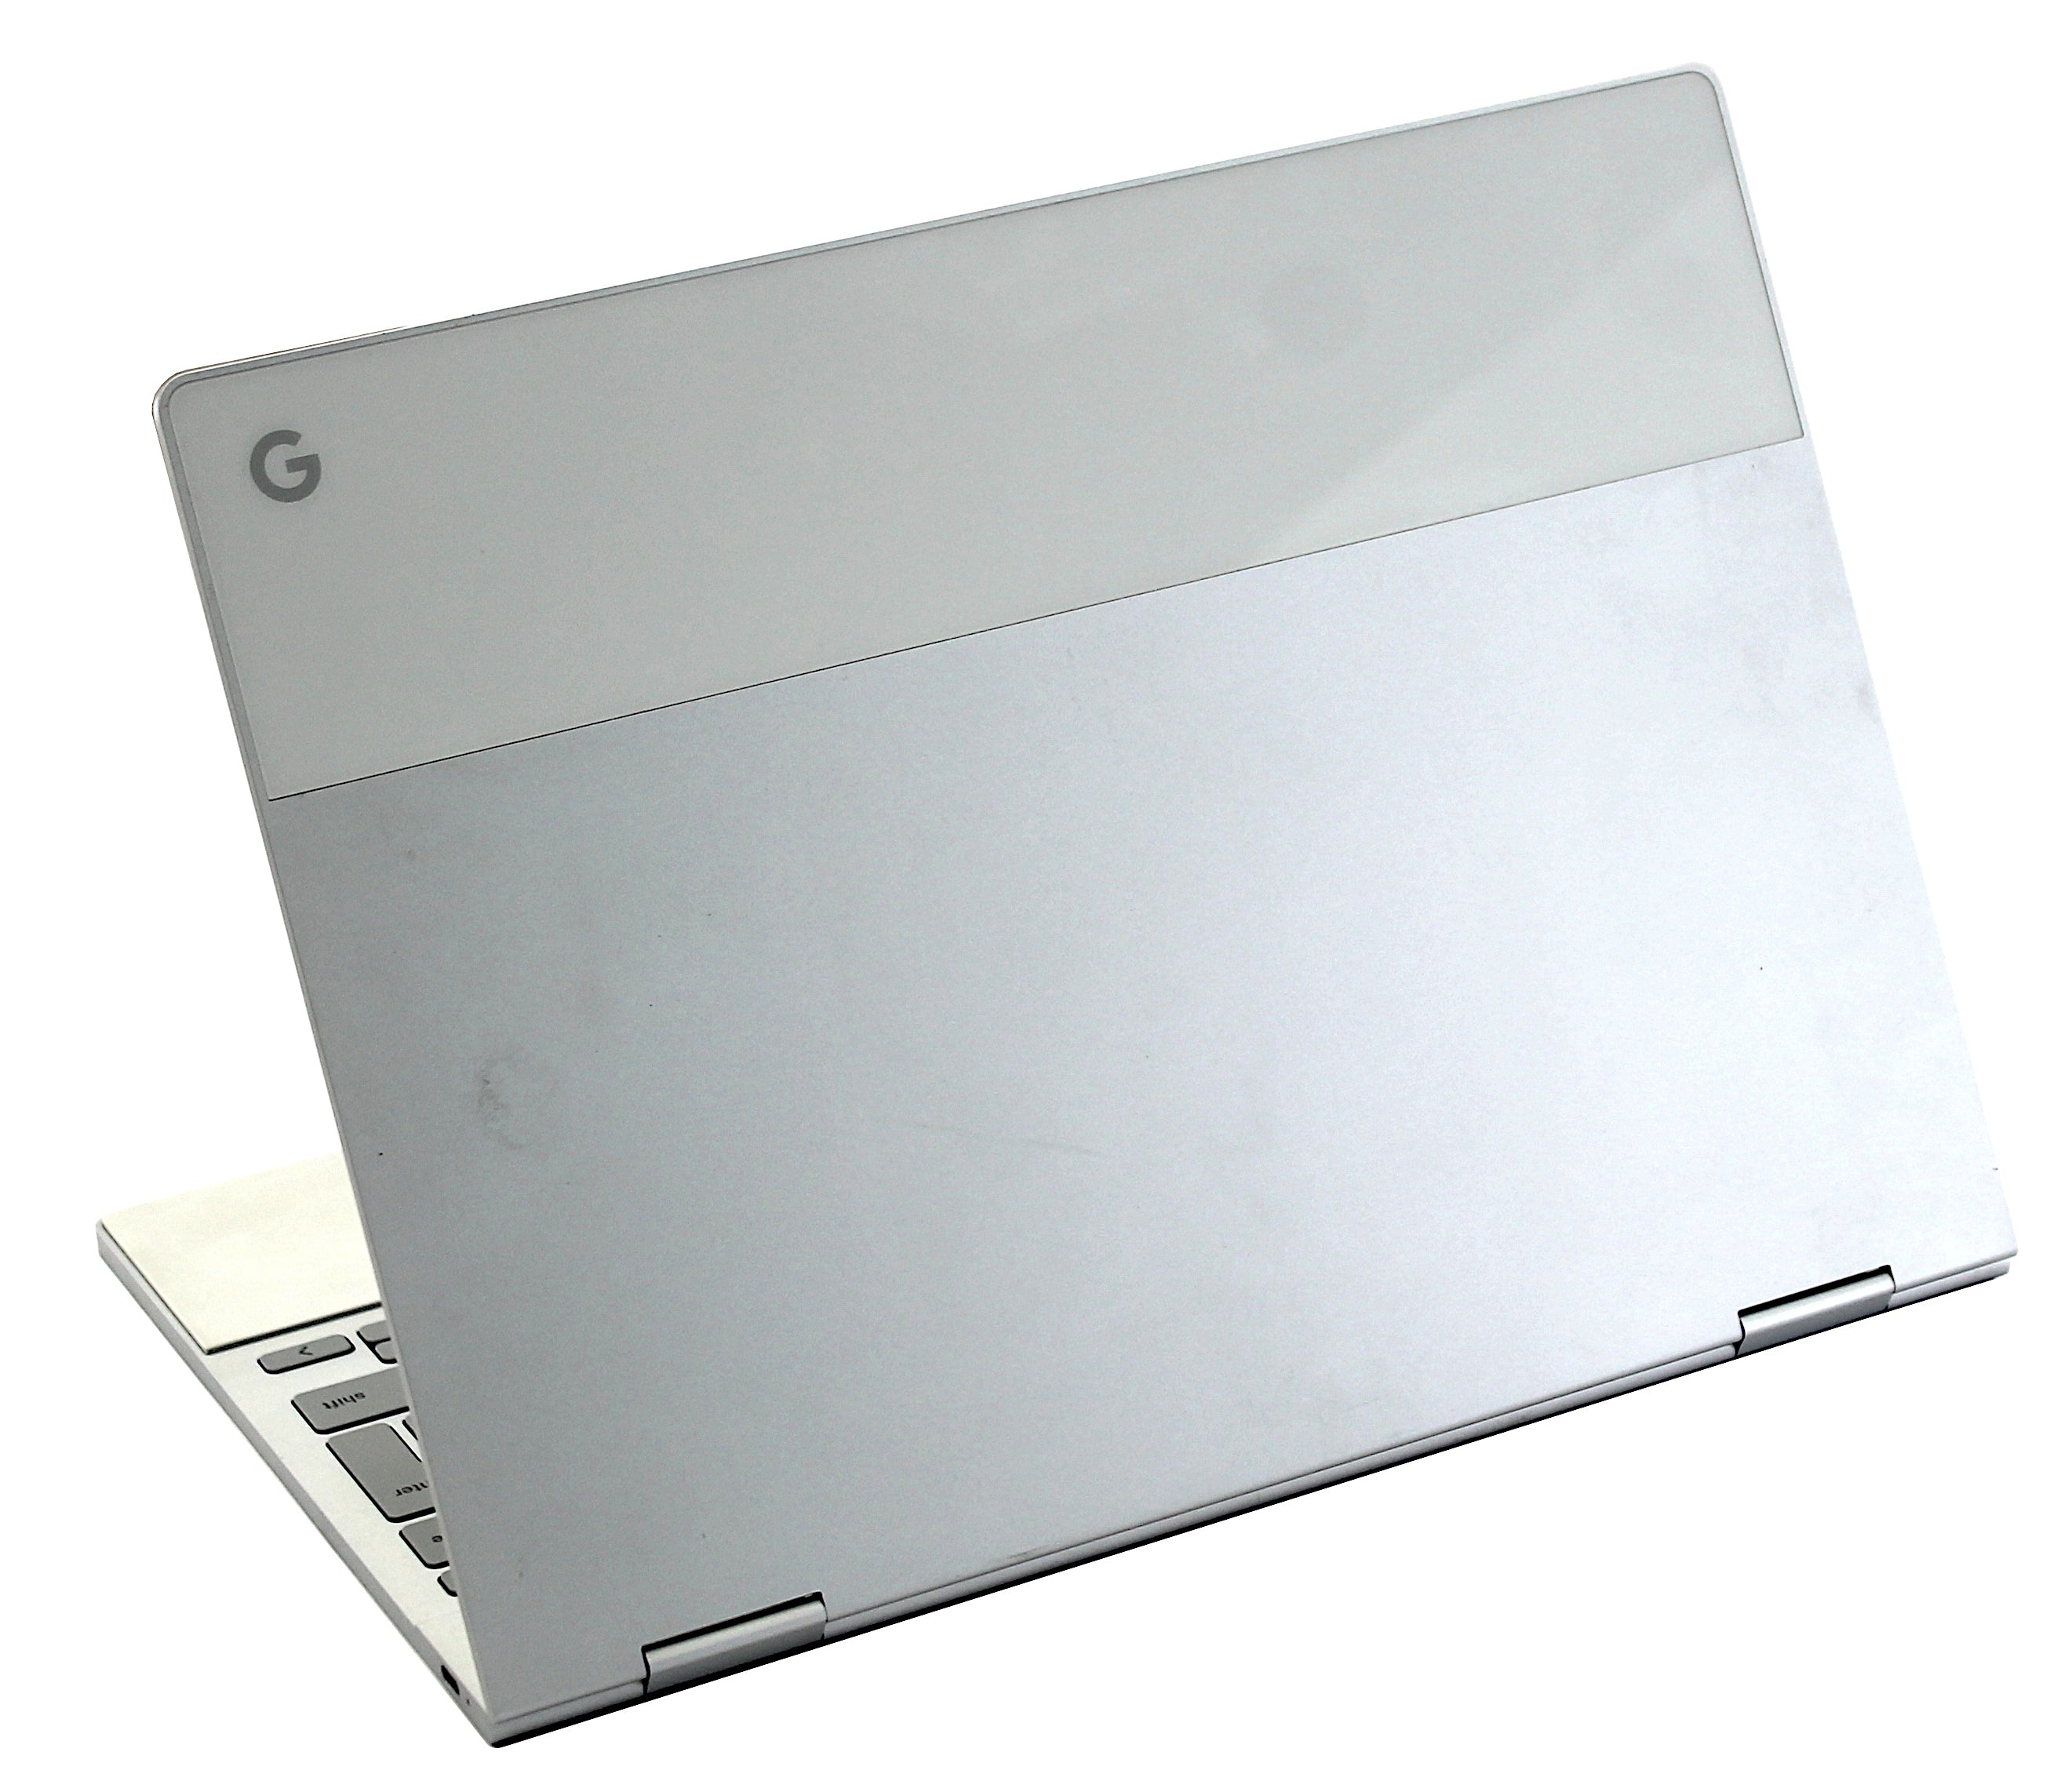 Google Pixelbook Chromebook, Core i5, 8GB RAM, 128GB SSD, 12.3" Touch, Win 10